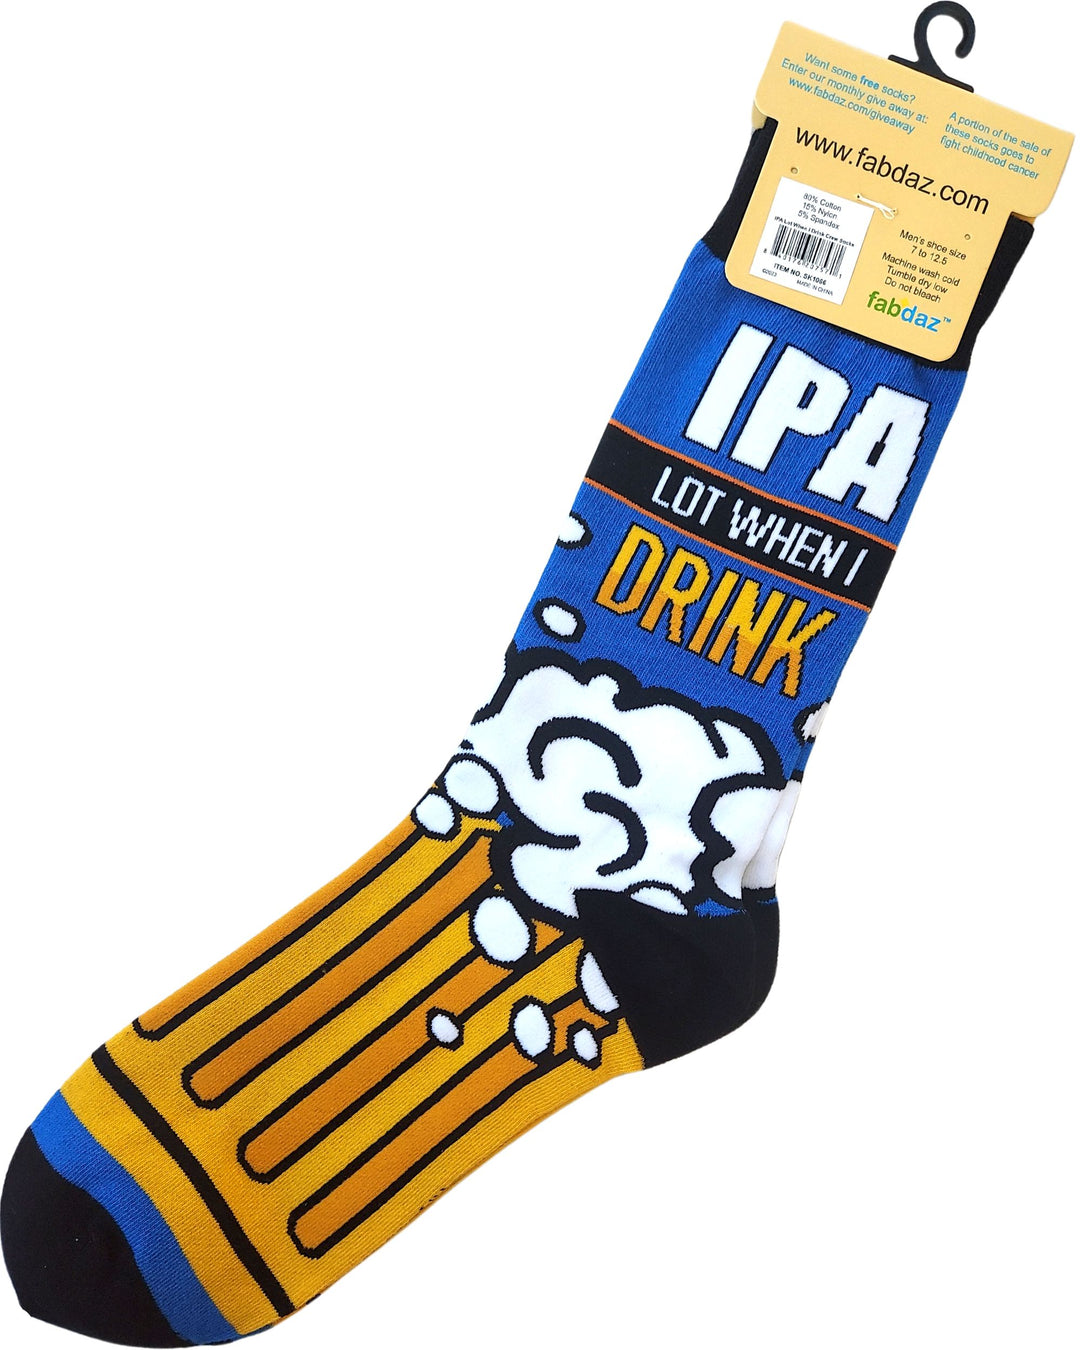 IPA Lot When I Drink Men's Novelty Crew Socks